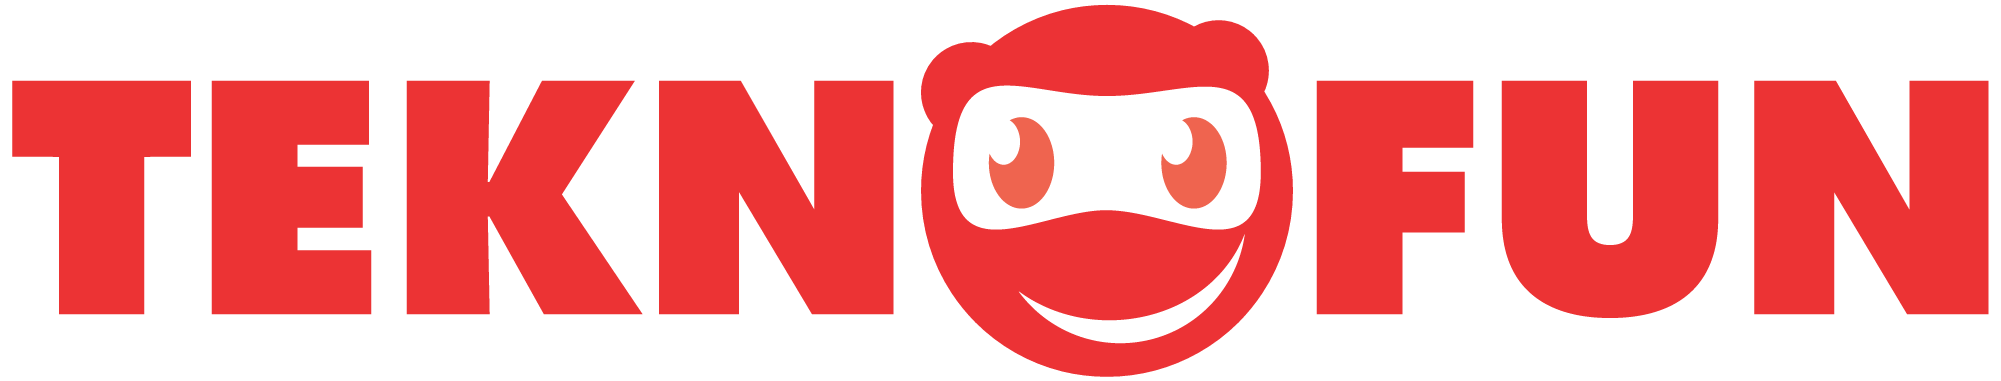 Teknofun logo